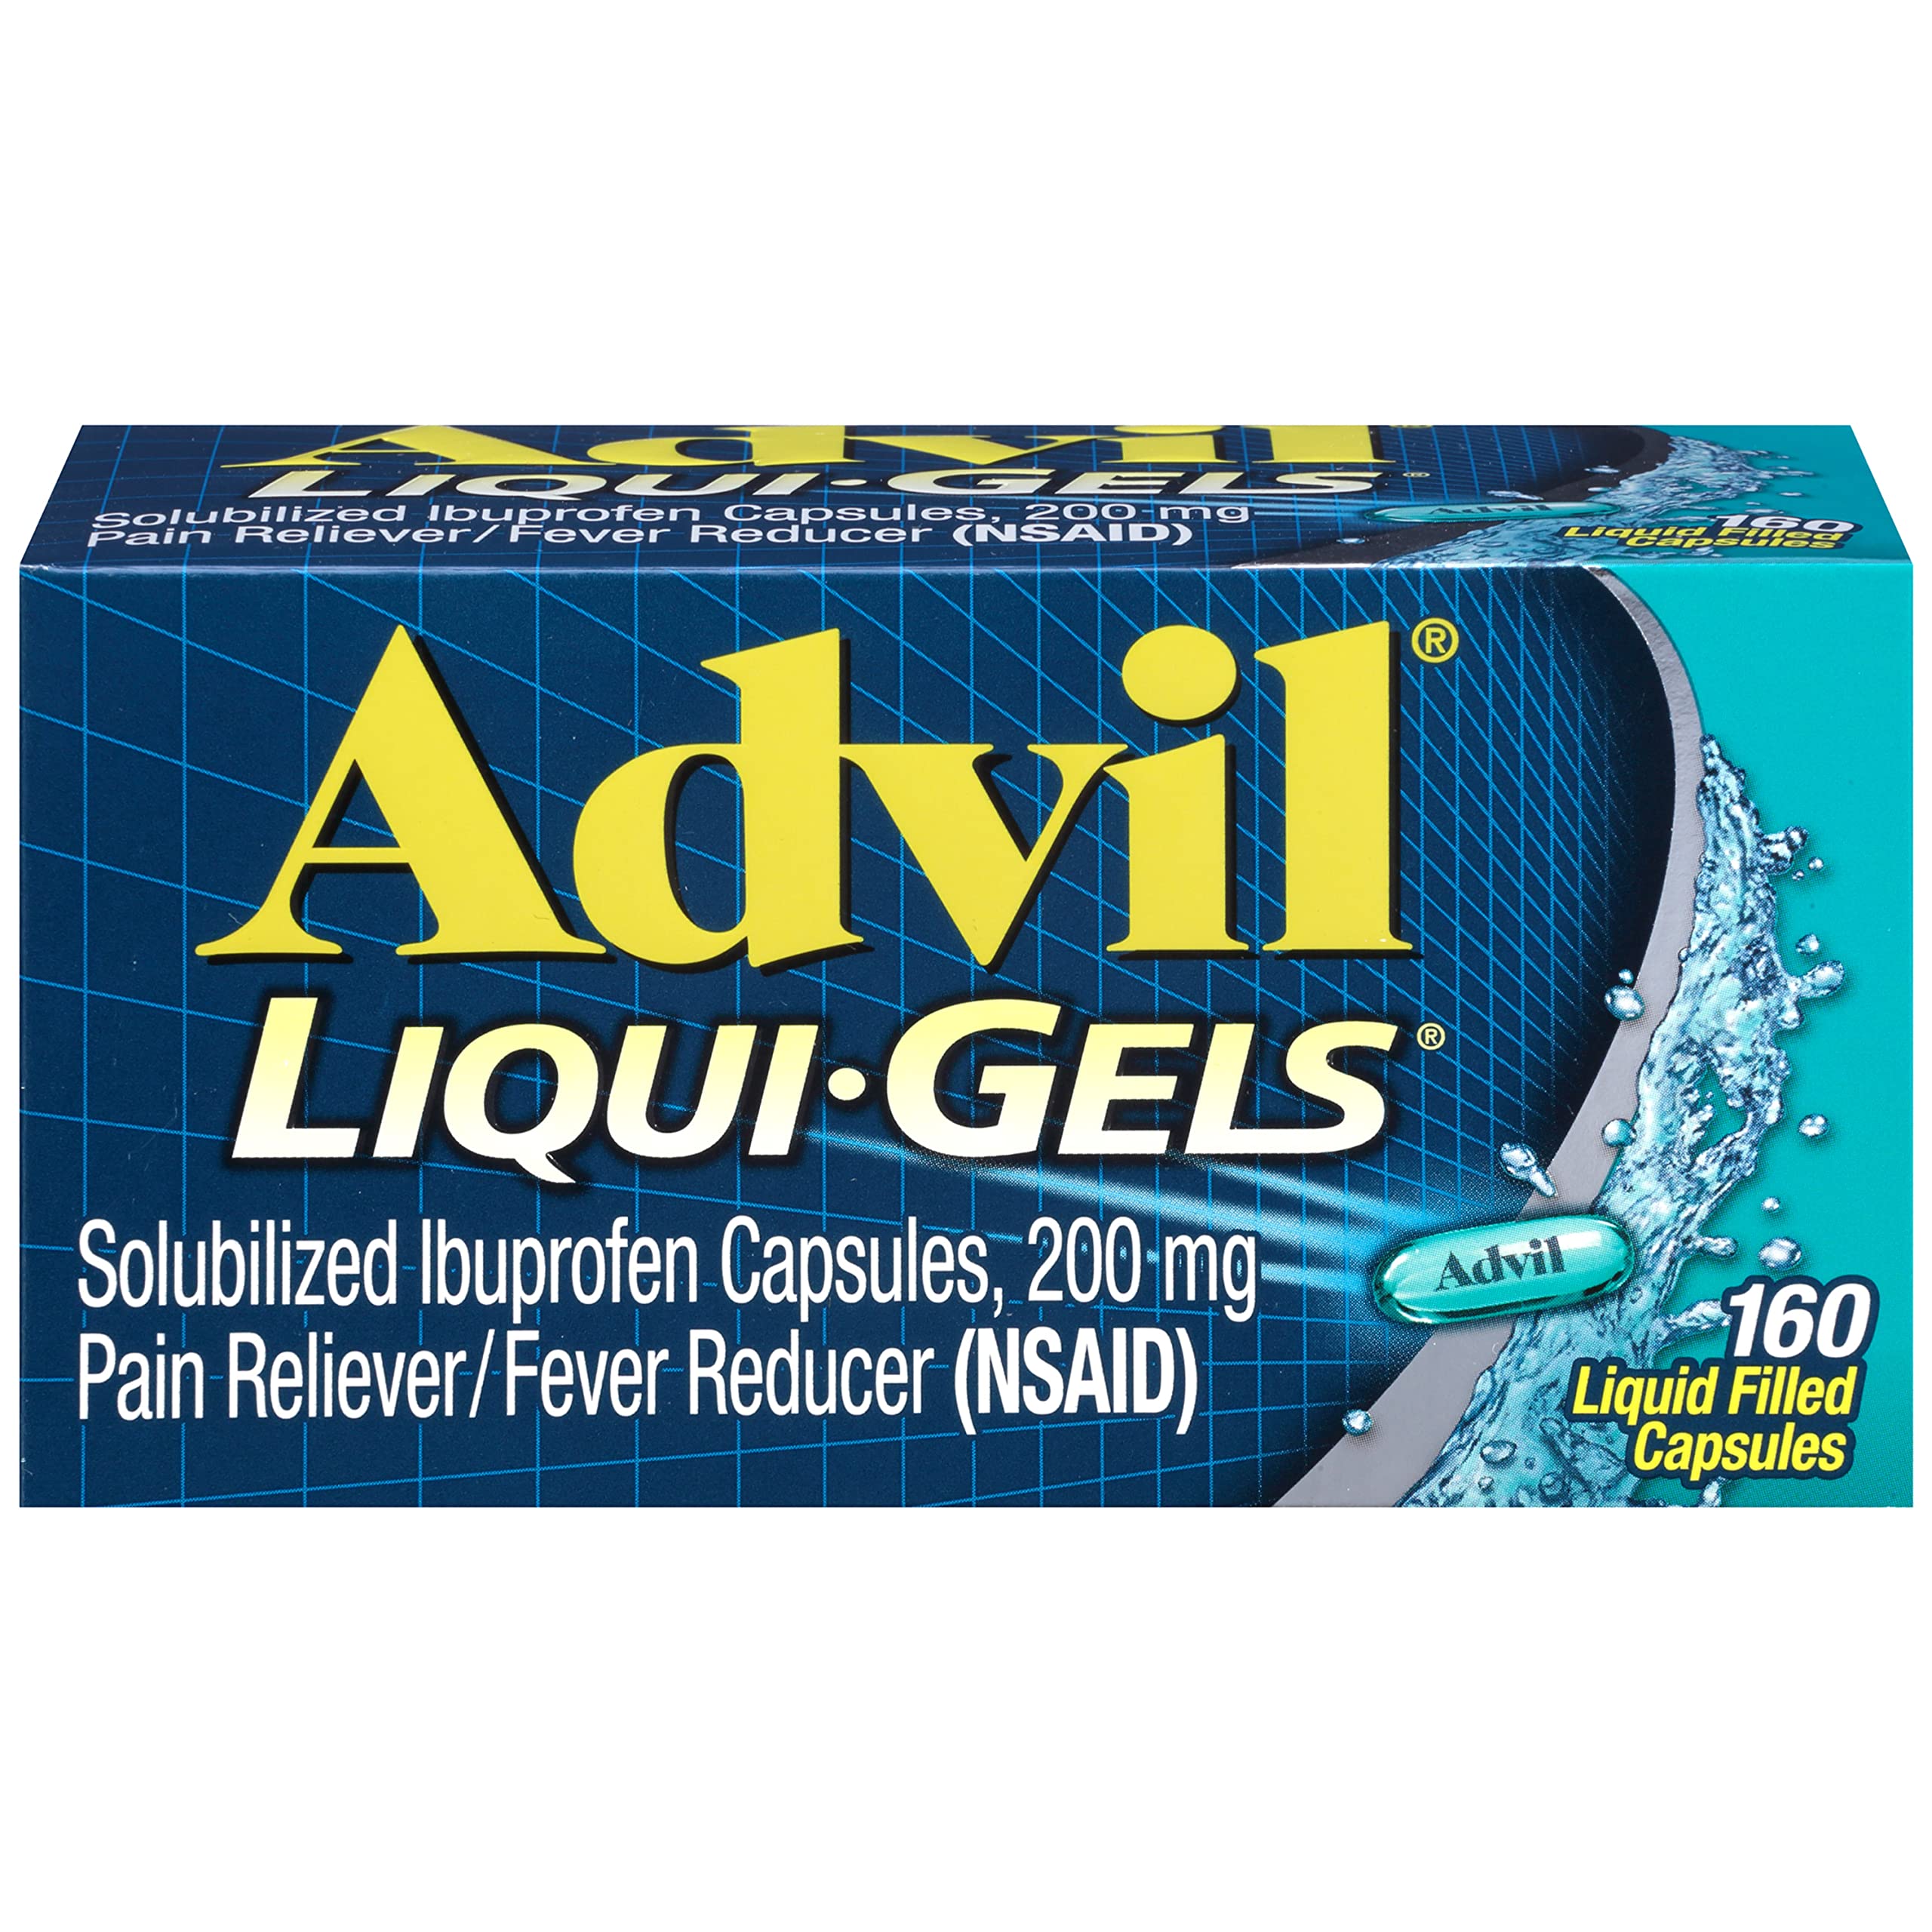 Advil liqui gels 200 mg